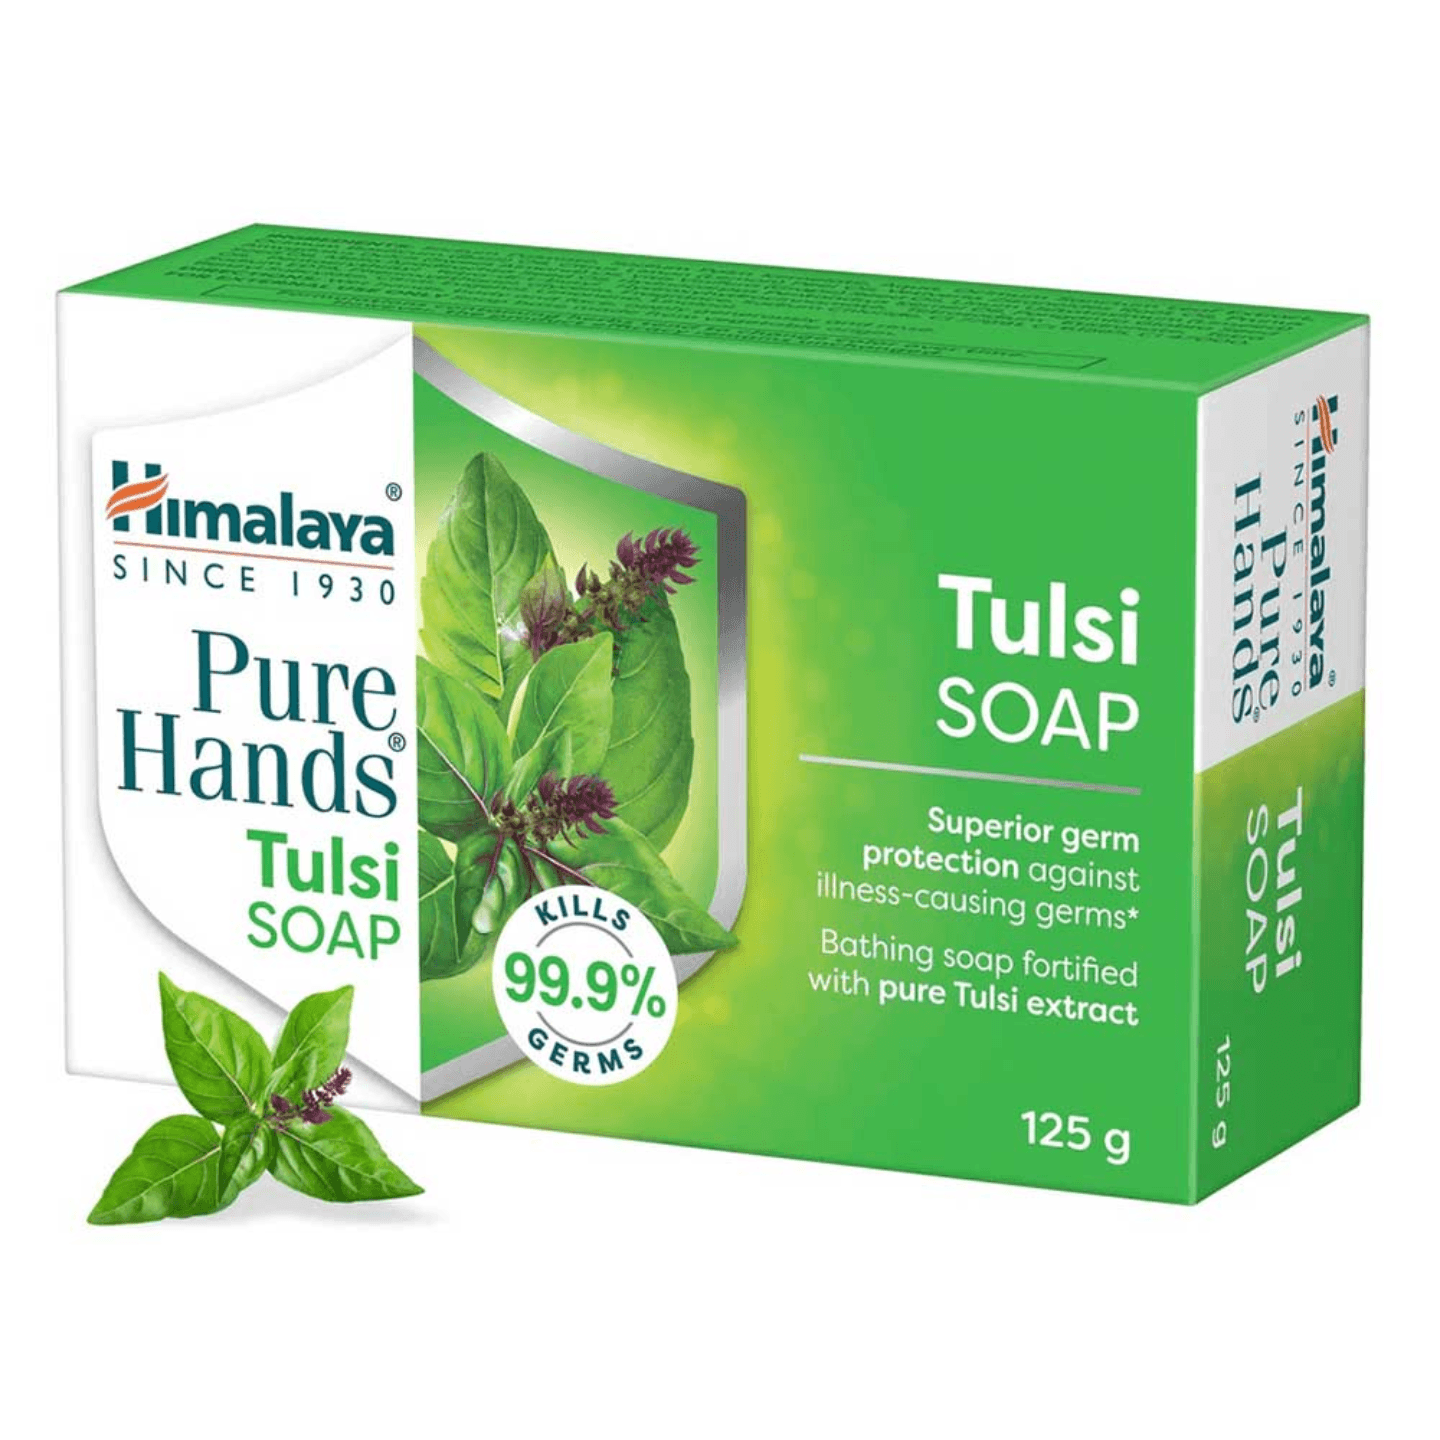 Himalaya Pure Hands Tulsi Soap (125g)